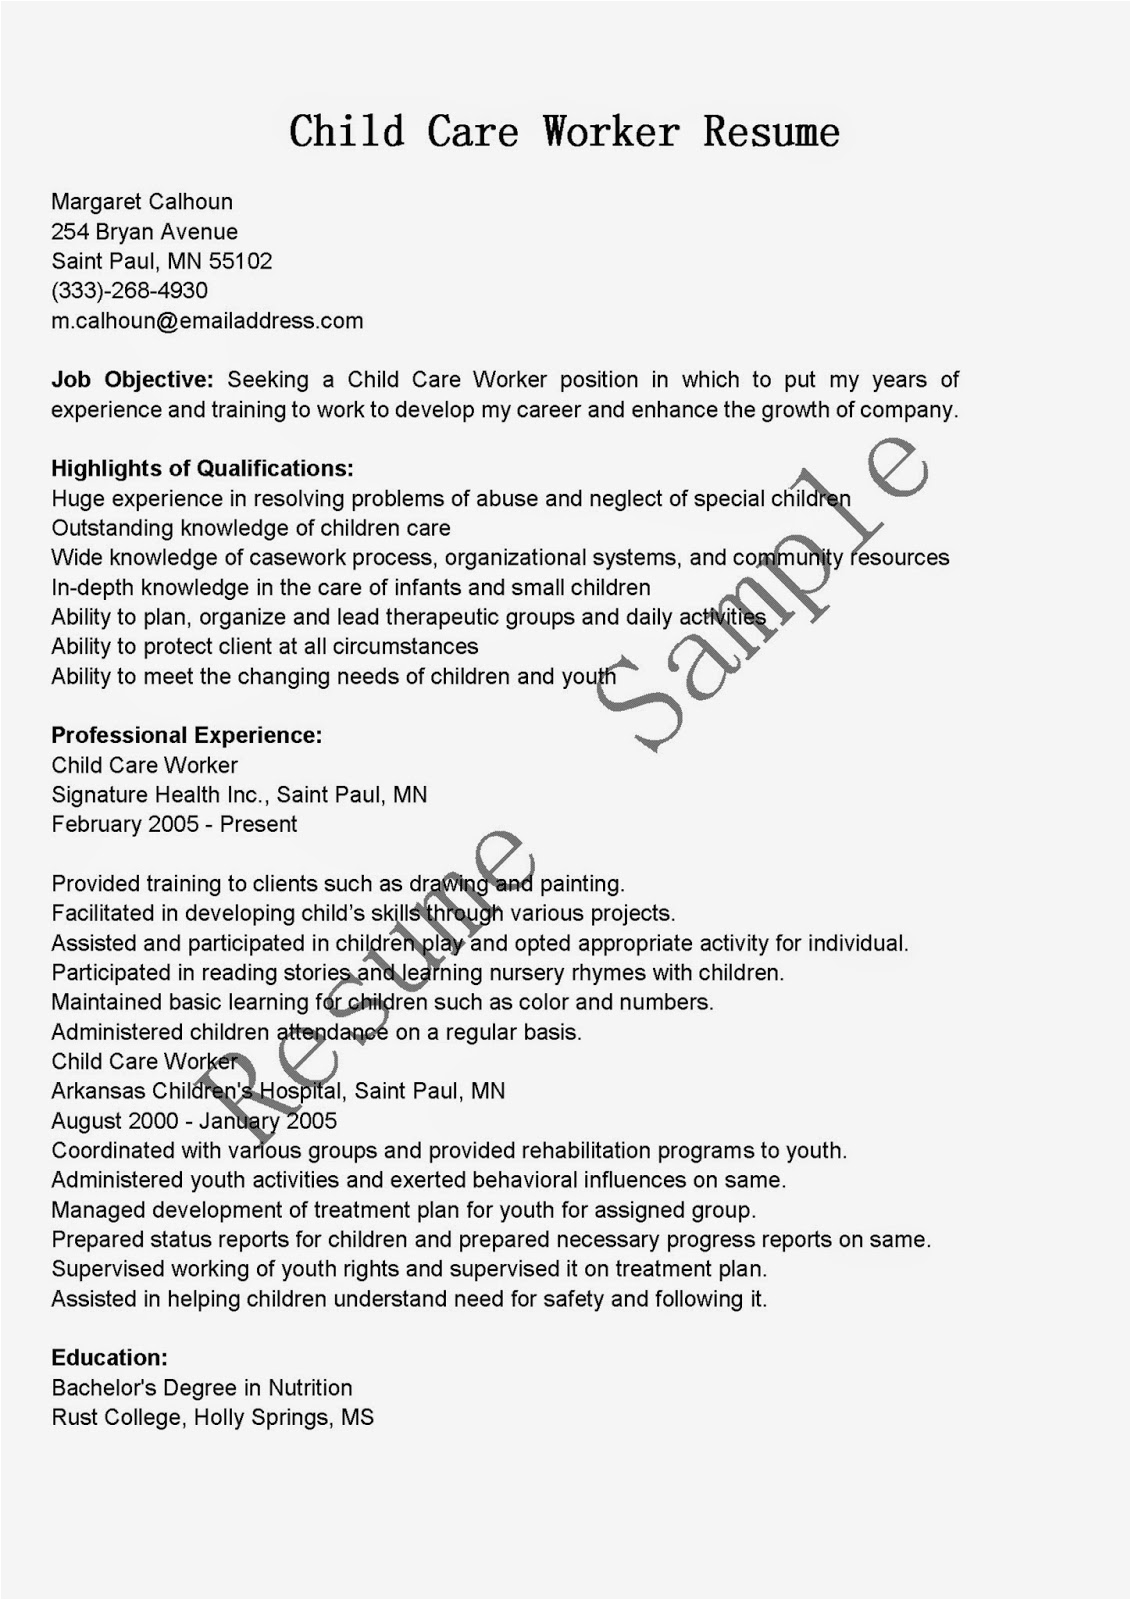 Sample Resume to Work In Childcare Resume Samples Child Care Worker Resume Sample